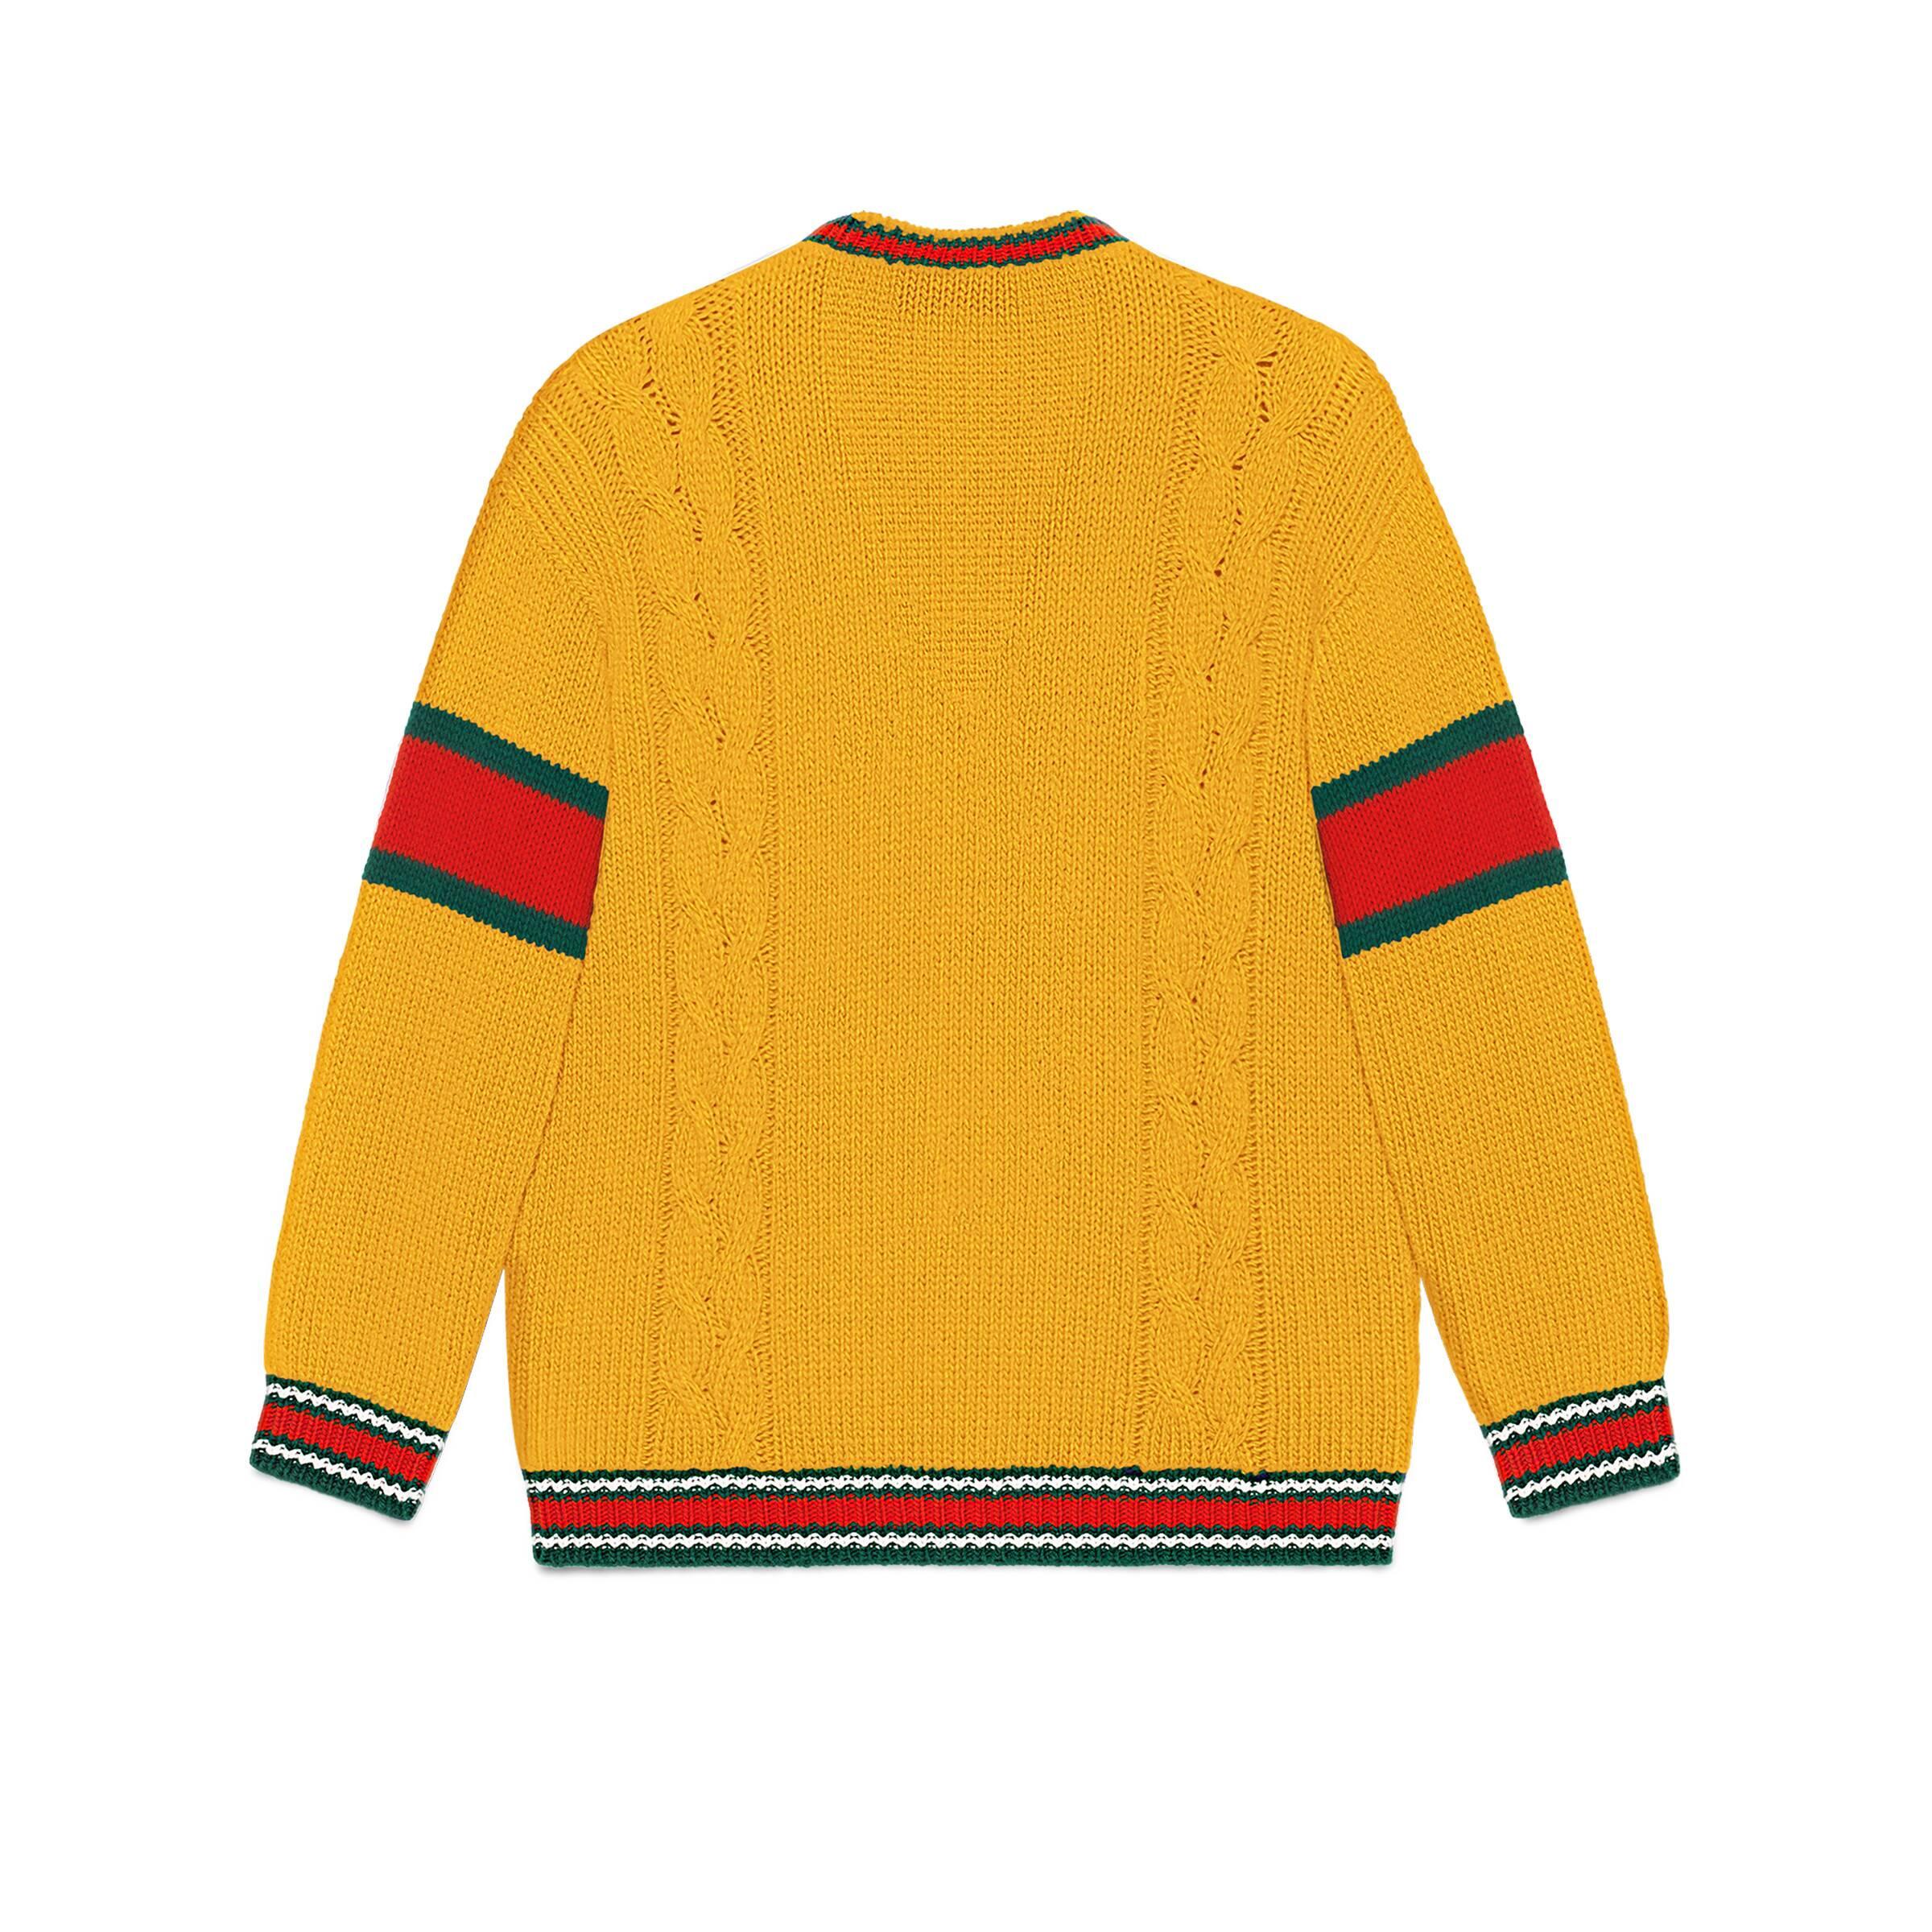 Gucci Diy Unisex Wool Sweater in Yellow - Lyst